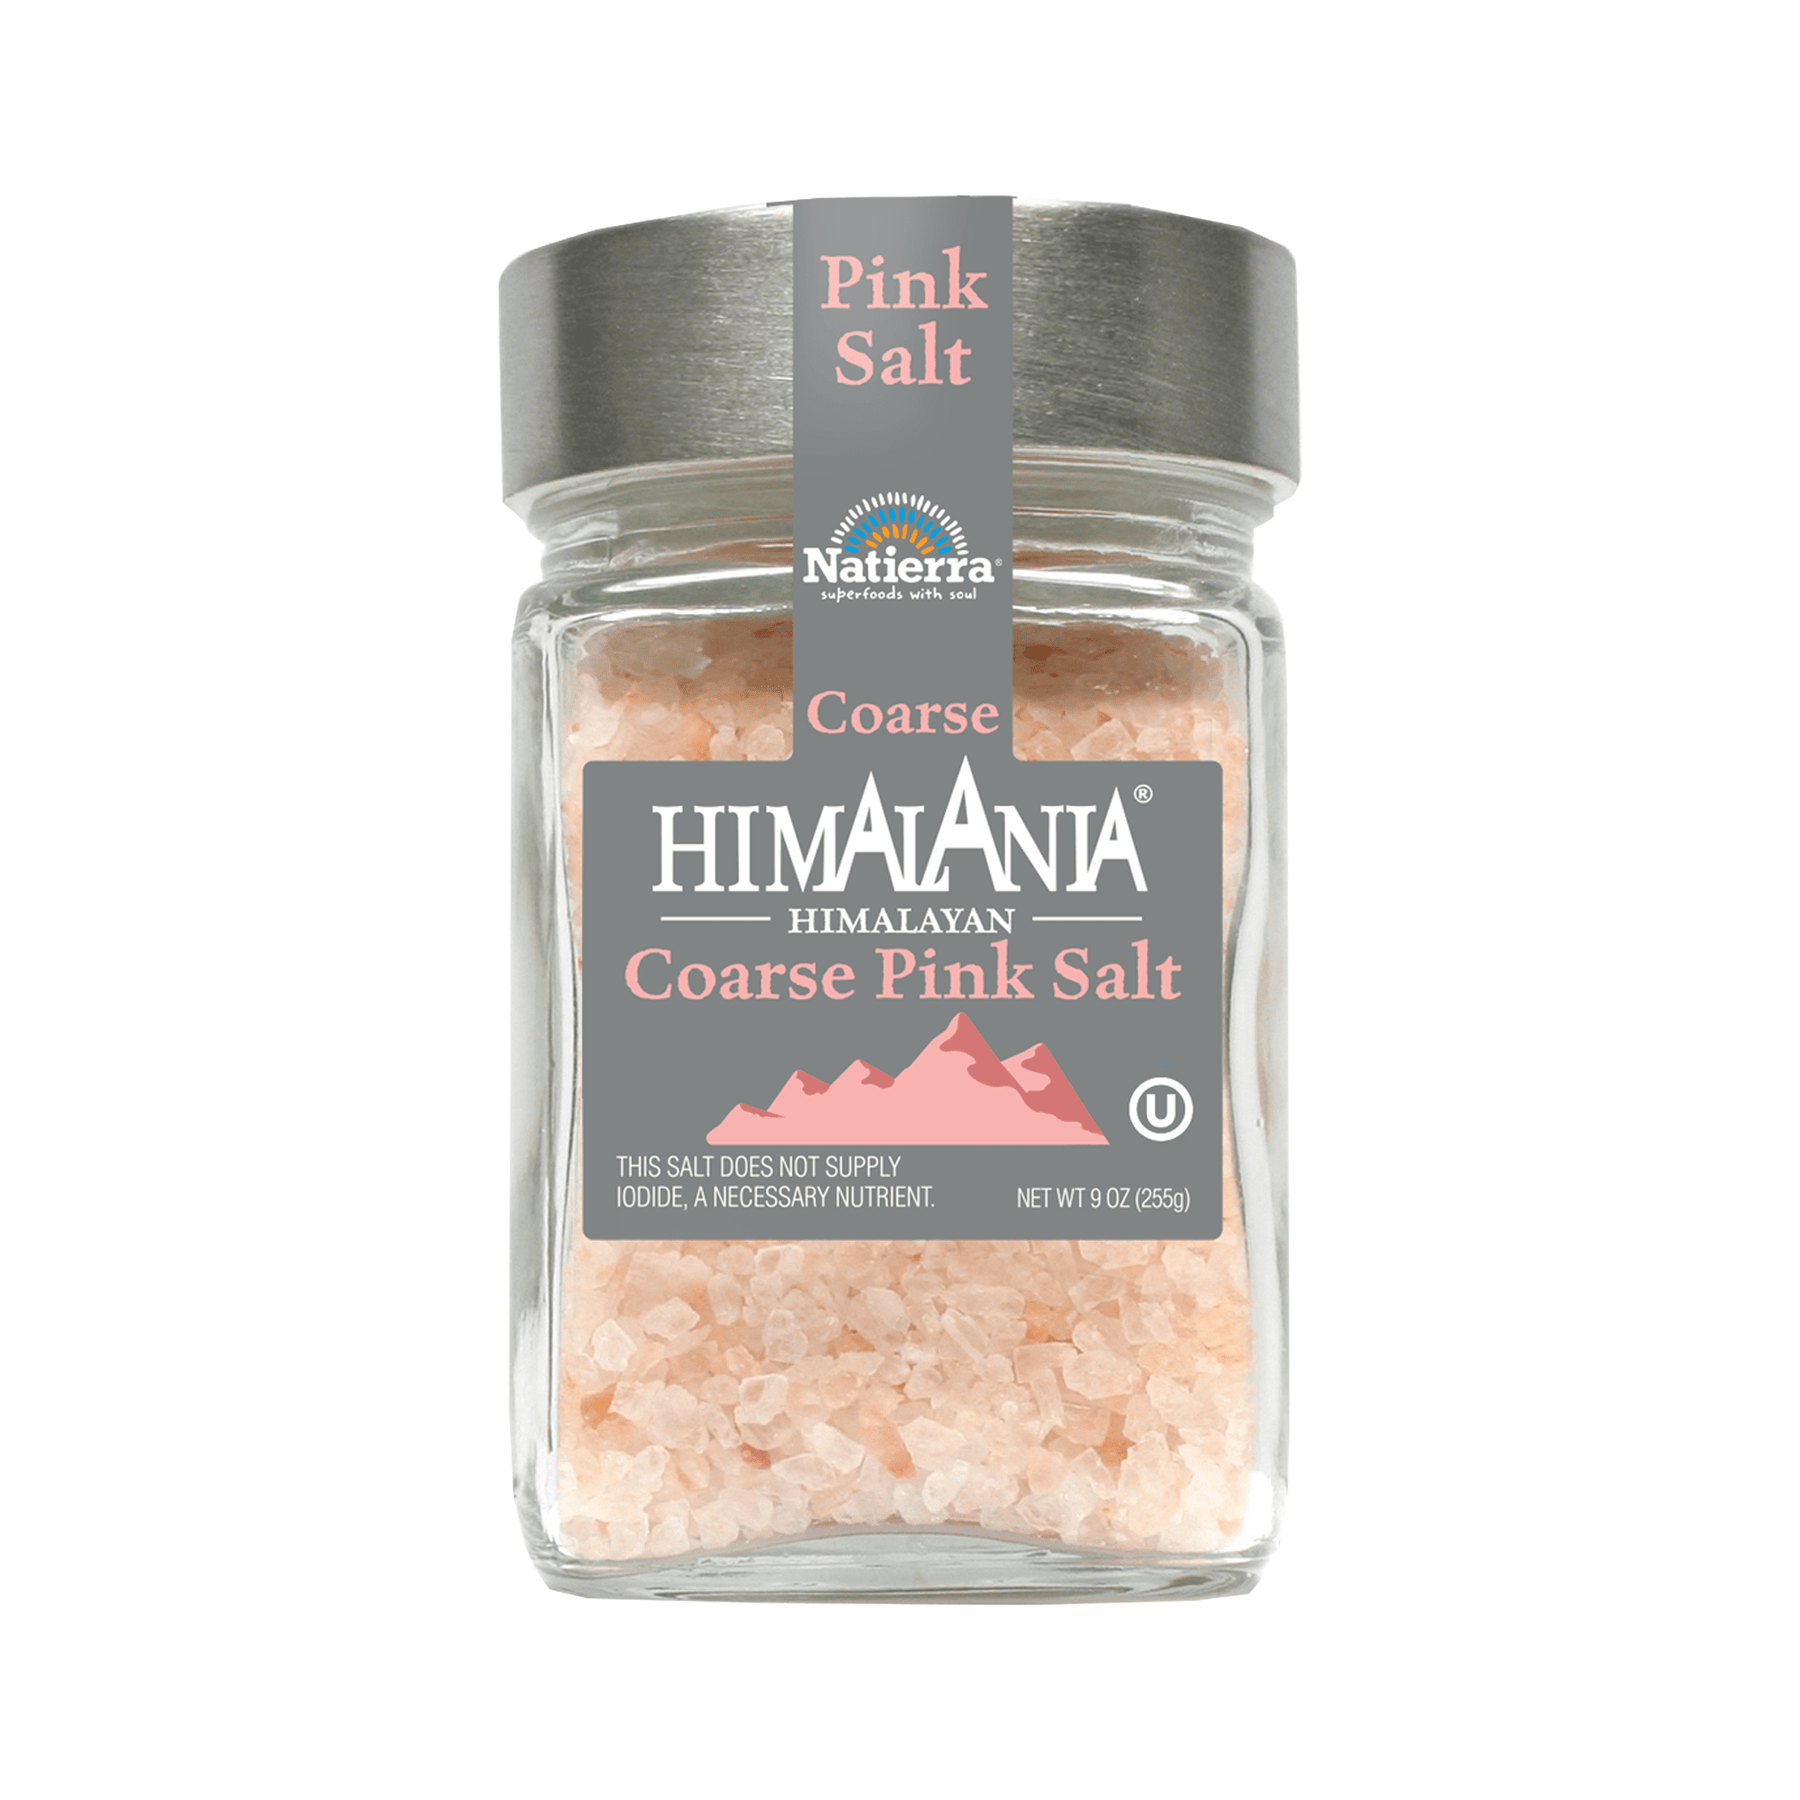 Natierra Himalania Coarse Pink Salt 7 oz jar